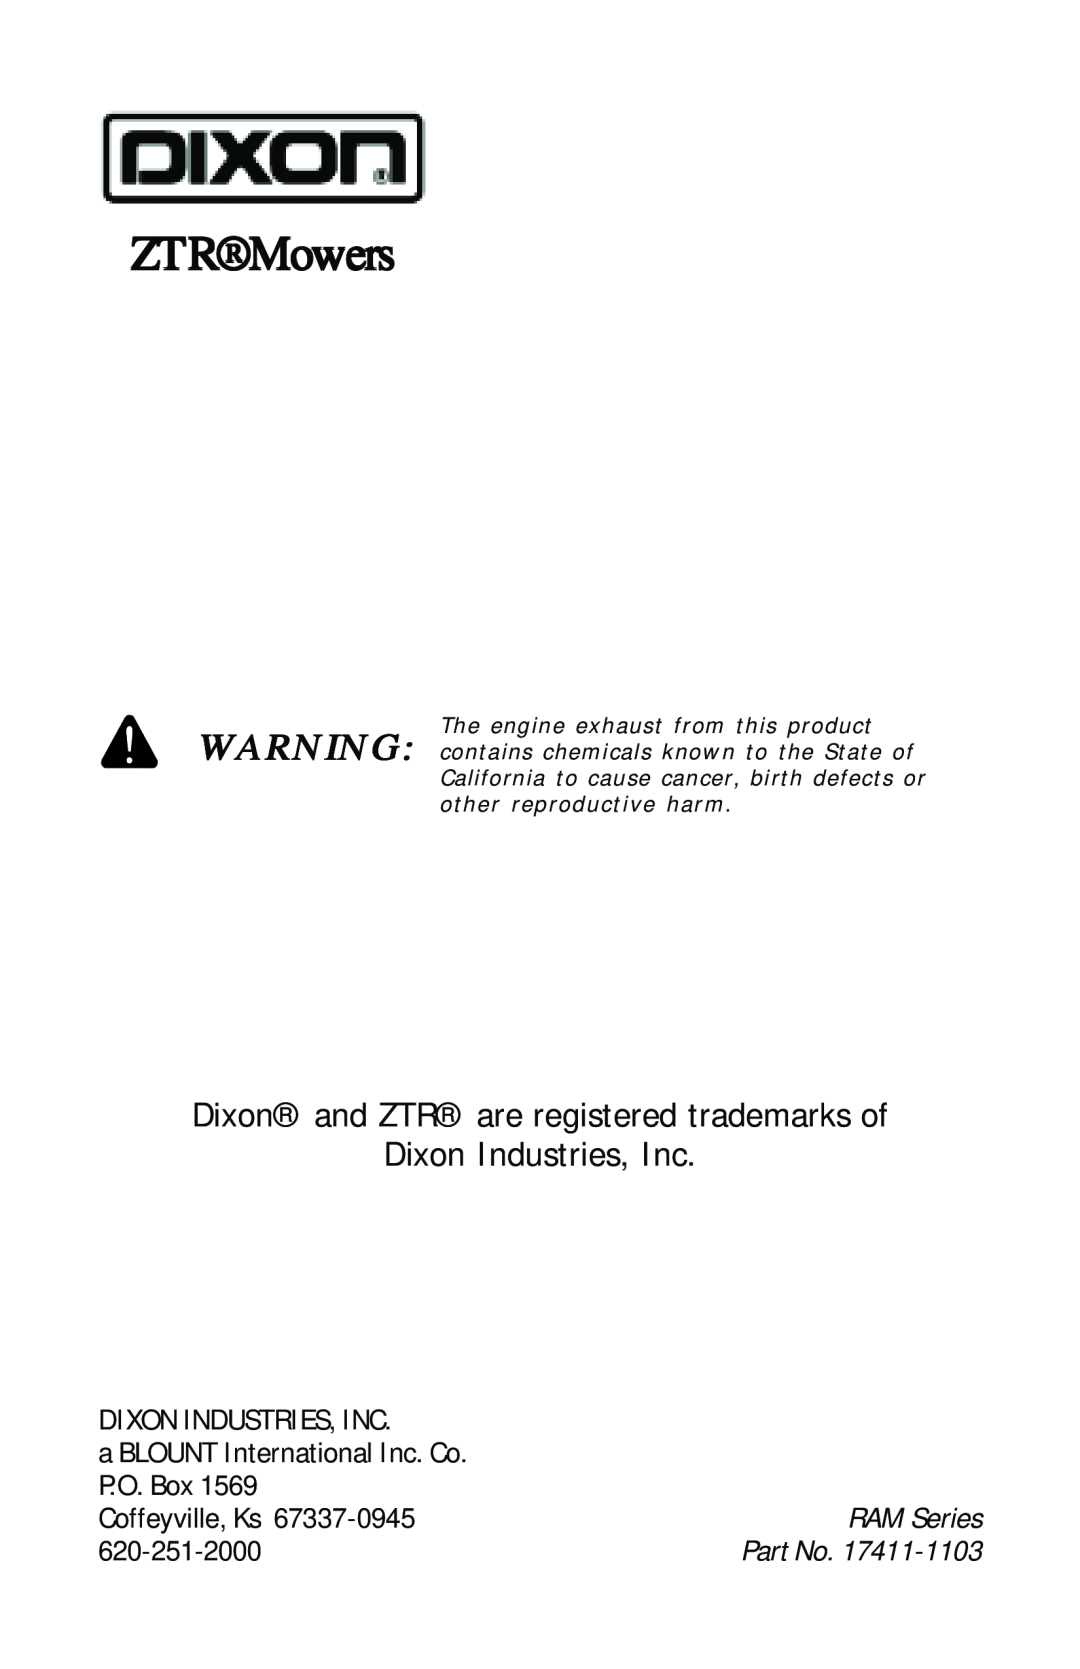 Dixon ZTR RAM 50, 17411-1103 manual ZTRMowers, Dixon and ZTR are registered trademarks of, Dixon Industries, Inc, RAM Series 